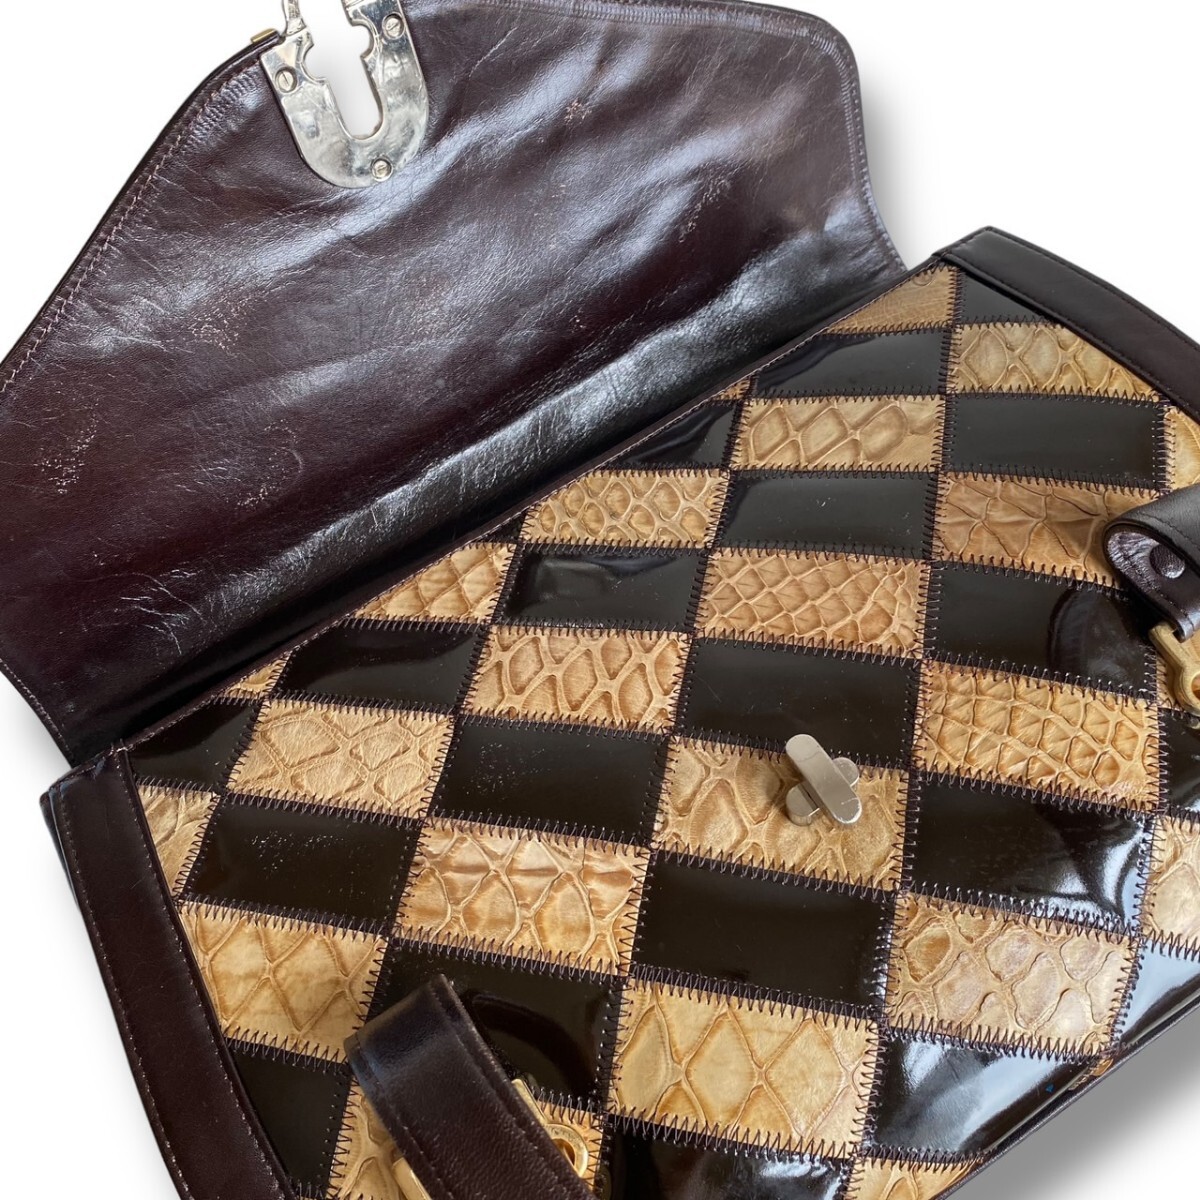  rare *sen The nkou. mountain . exotic * original leather patchwork handbag bag Gold metal fittings shoulder .. Brown *